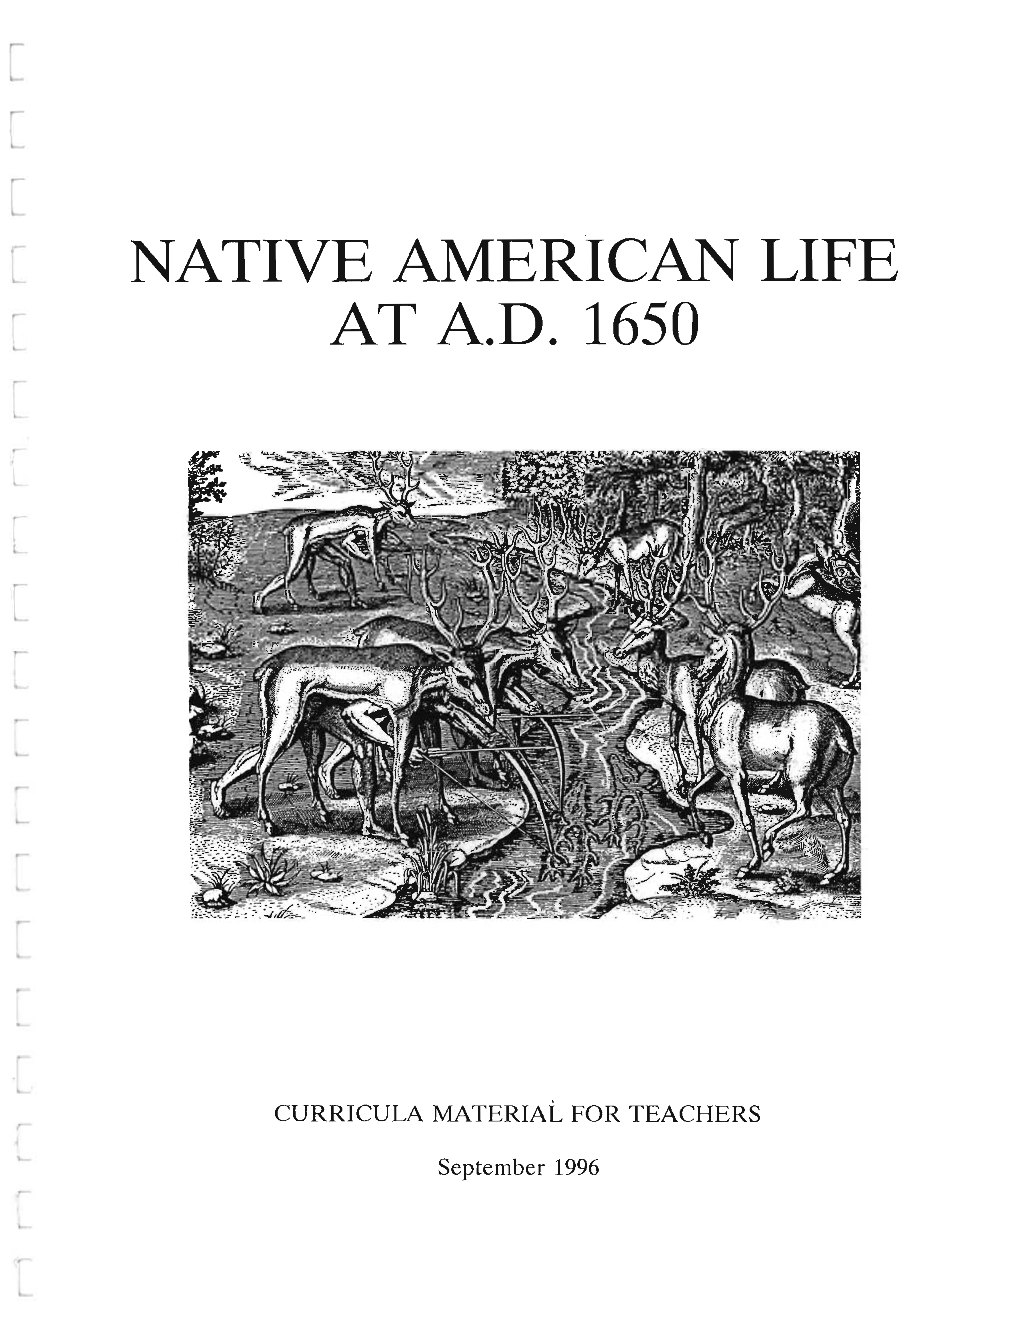 Native American Life at A.D. 1650: Curricula